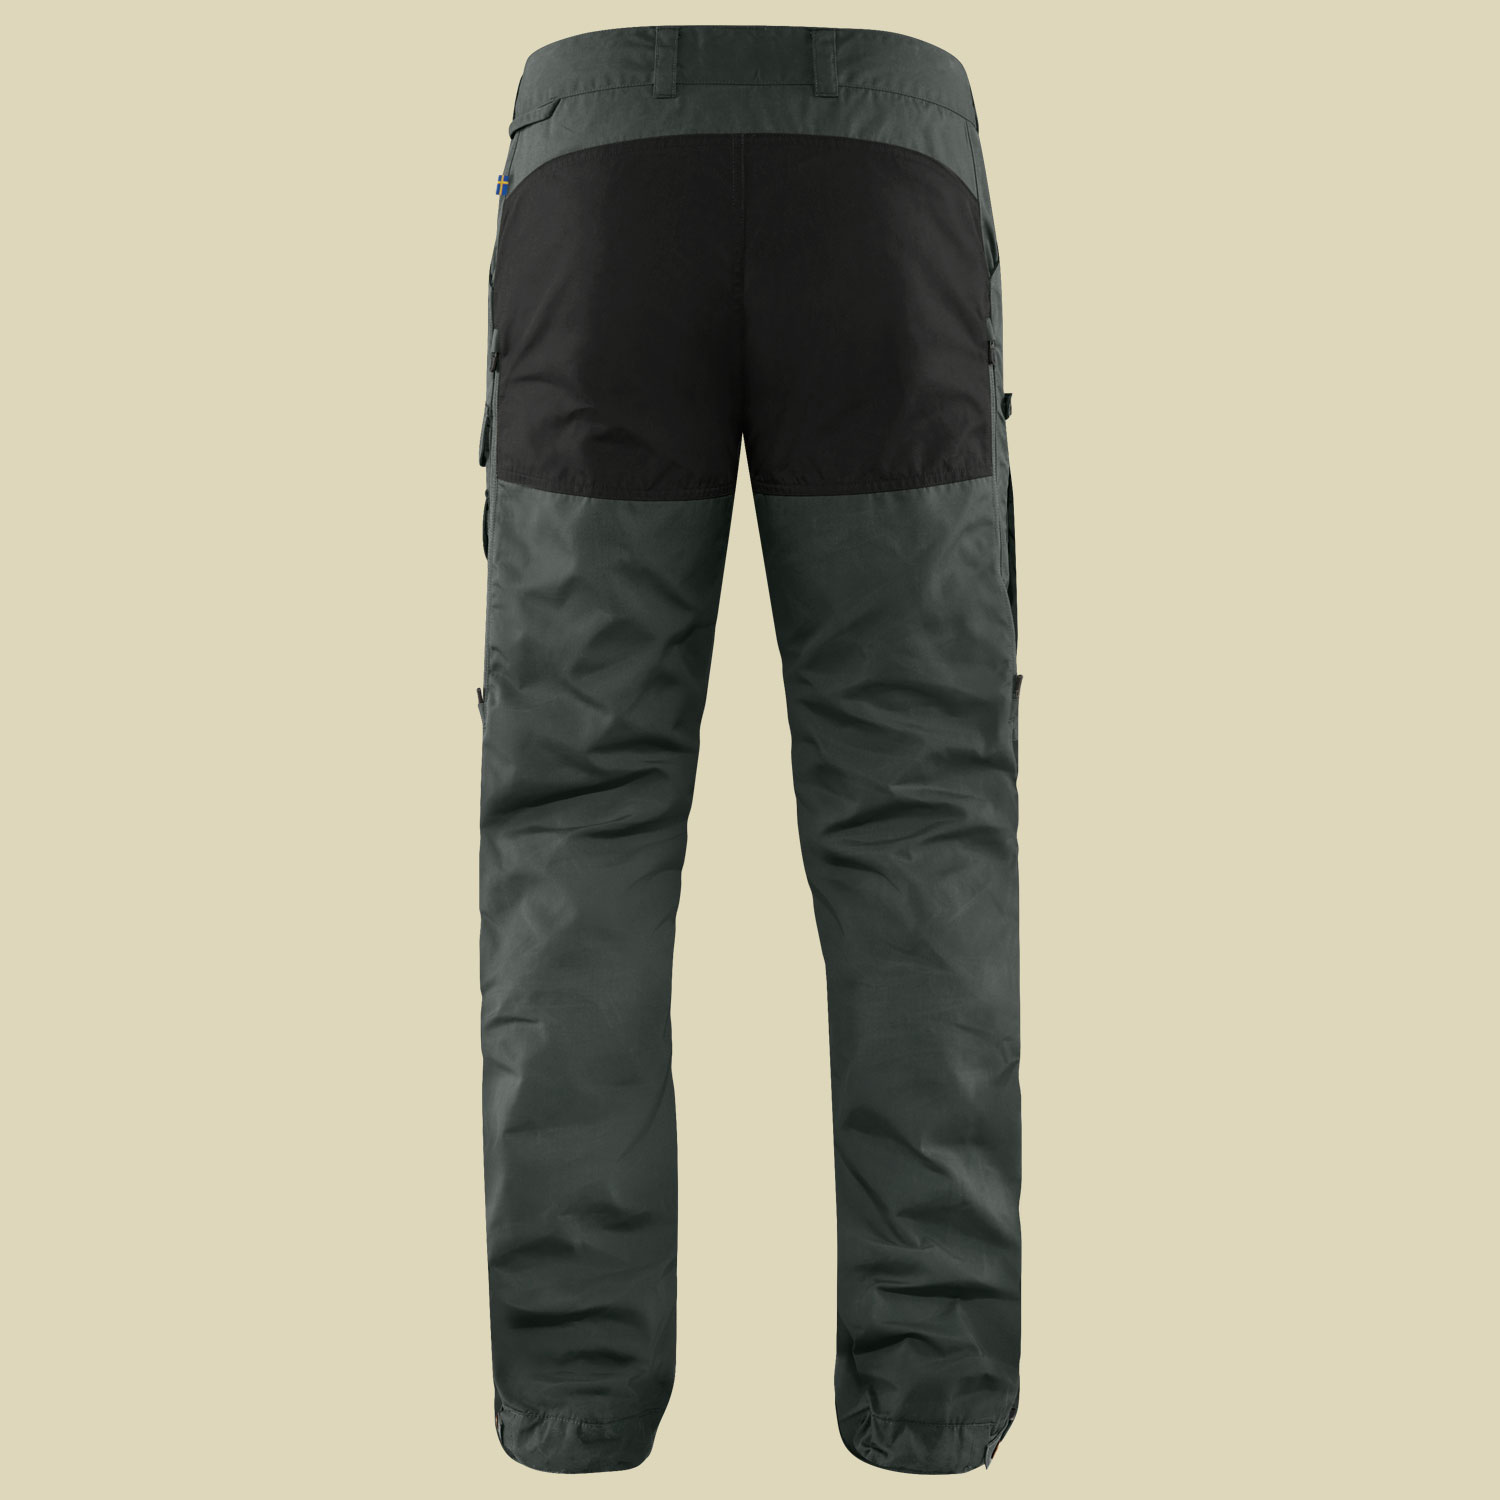 Vidda Pro Ventilated Trousers Men Reg Größe 56 Farbe dark grey/black